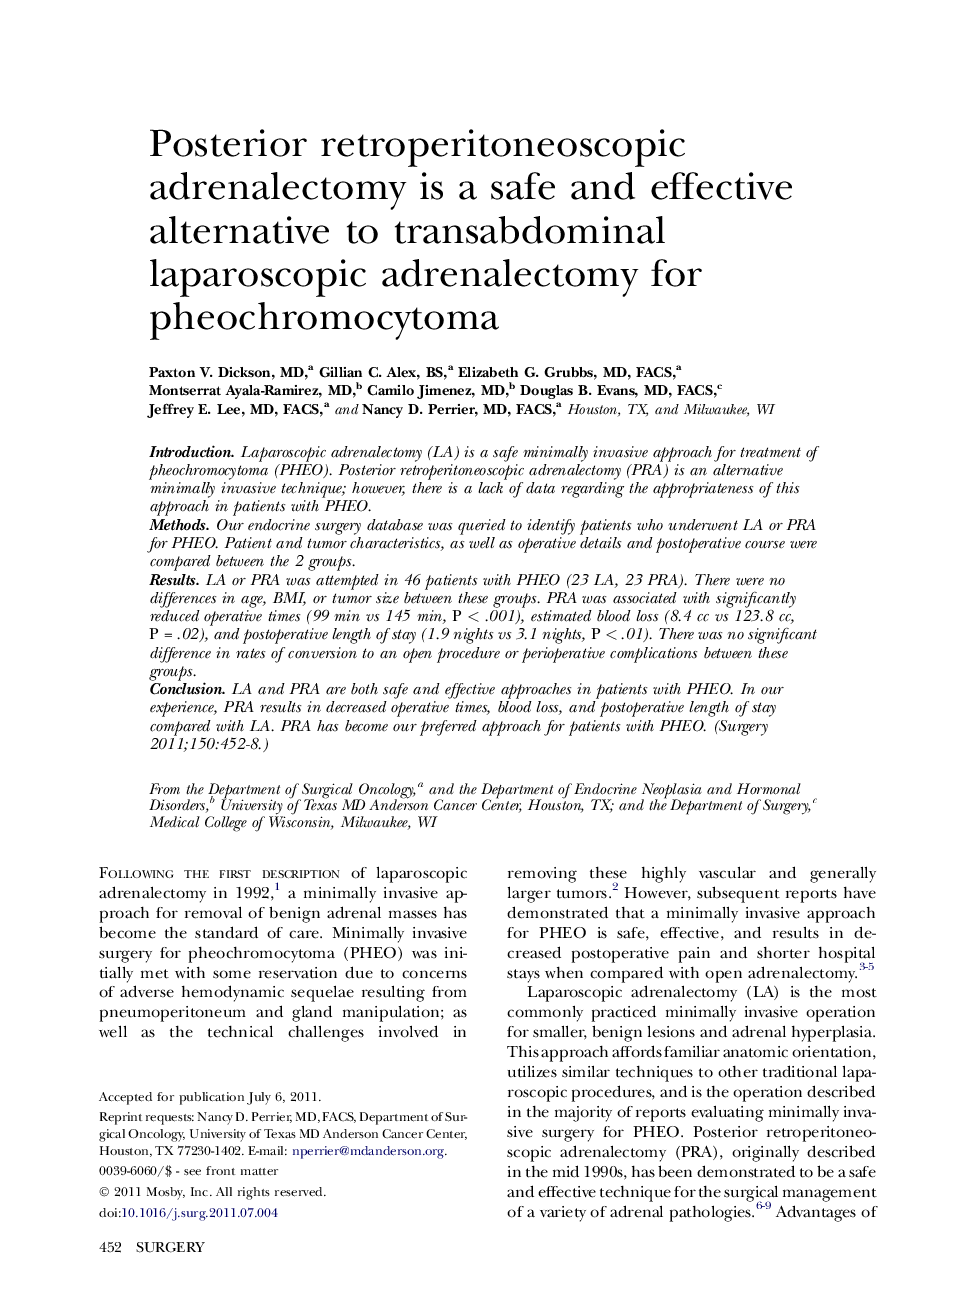 Posterior retroperitoneoscopic adrenalectomy is a safe and effective alternative to transabdominal laparoscopic adrenalectomy for pheochromocytoma